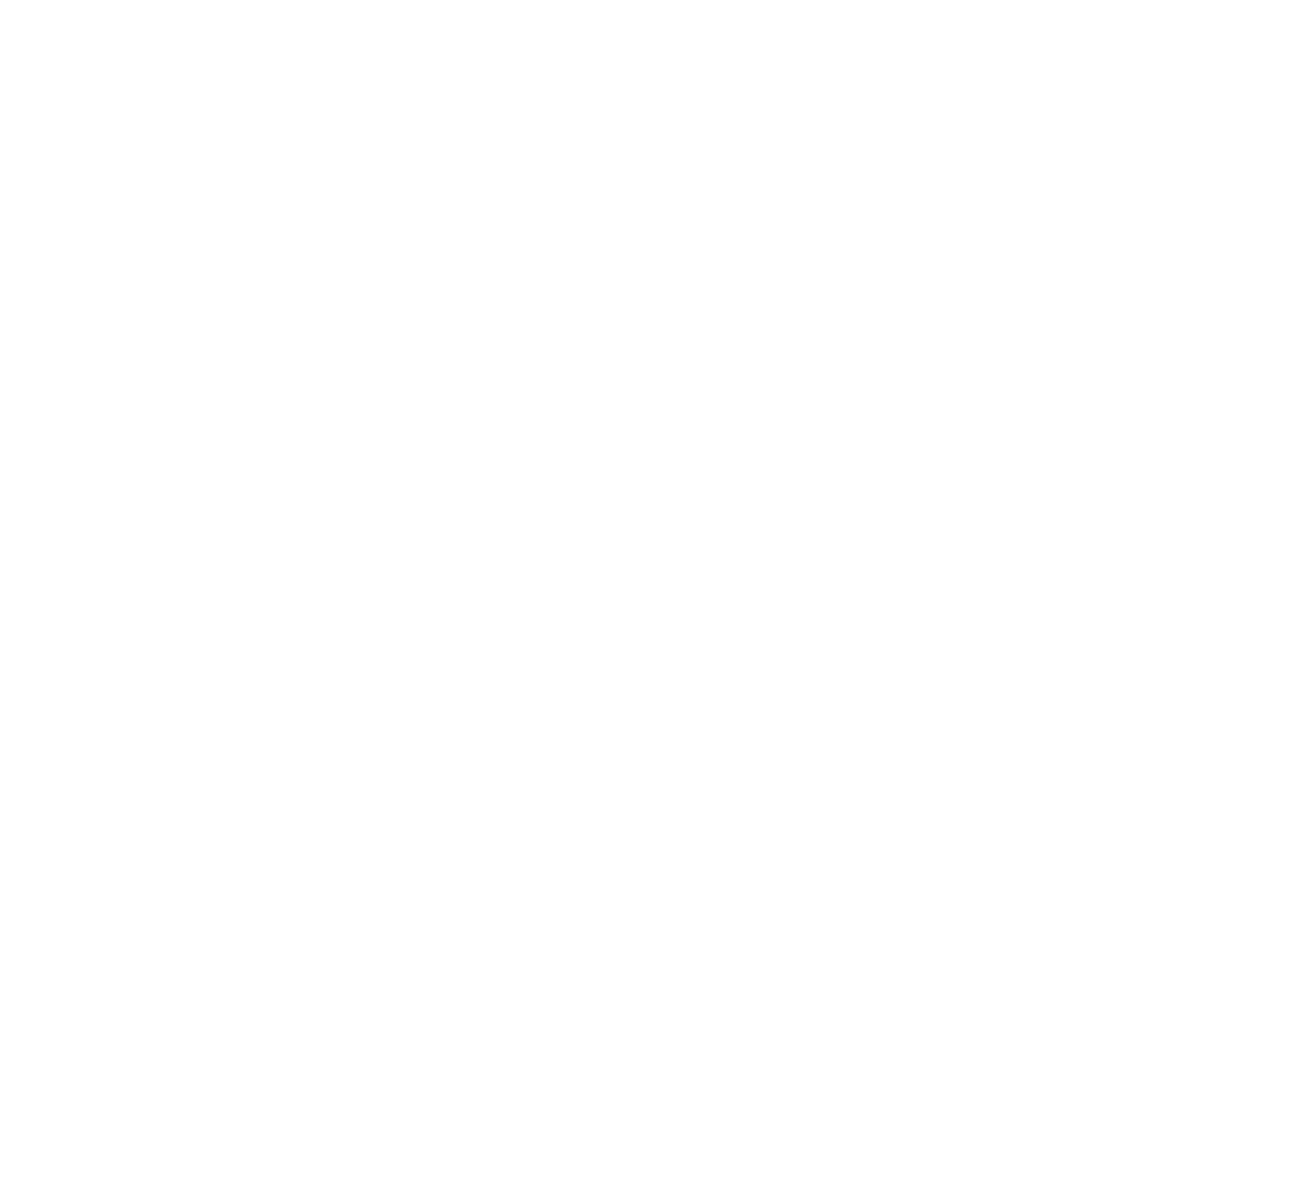 Manke Chile